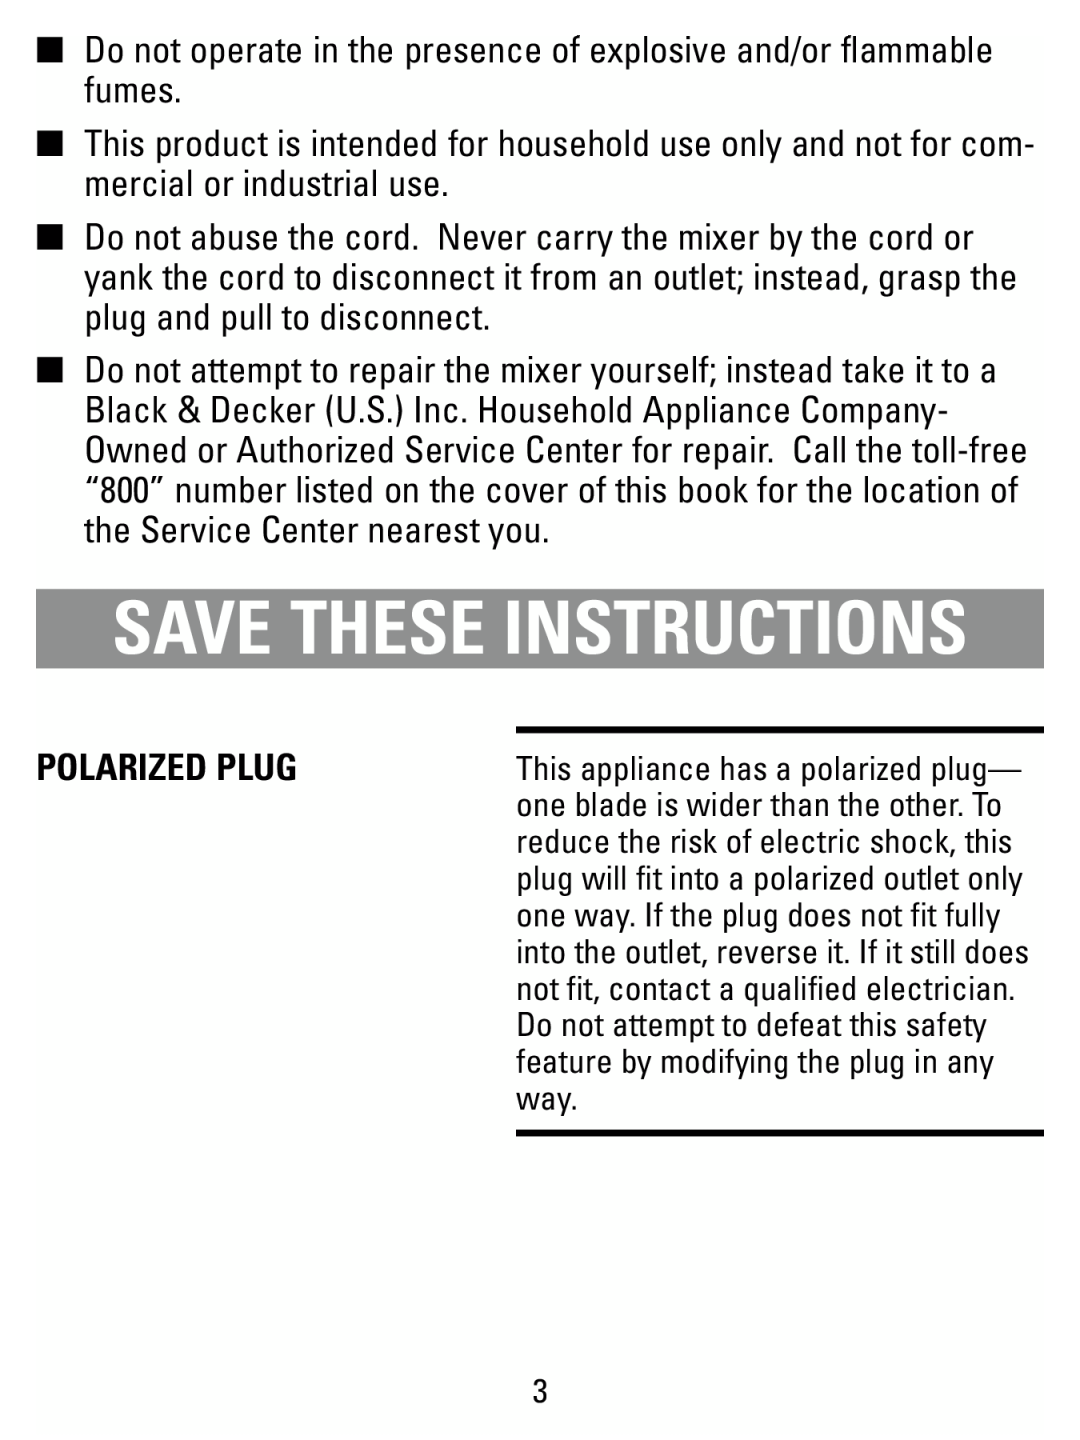 Black & Decker M175W manual Polarized Plug, Save These Instructions 